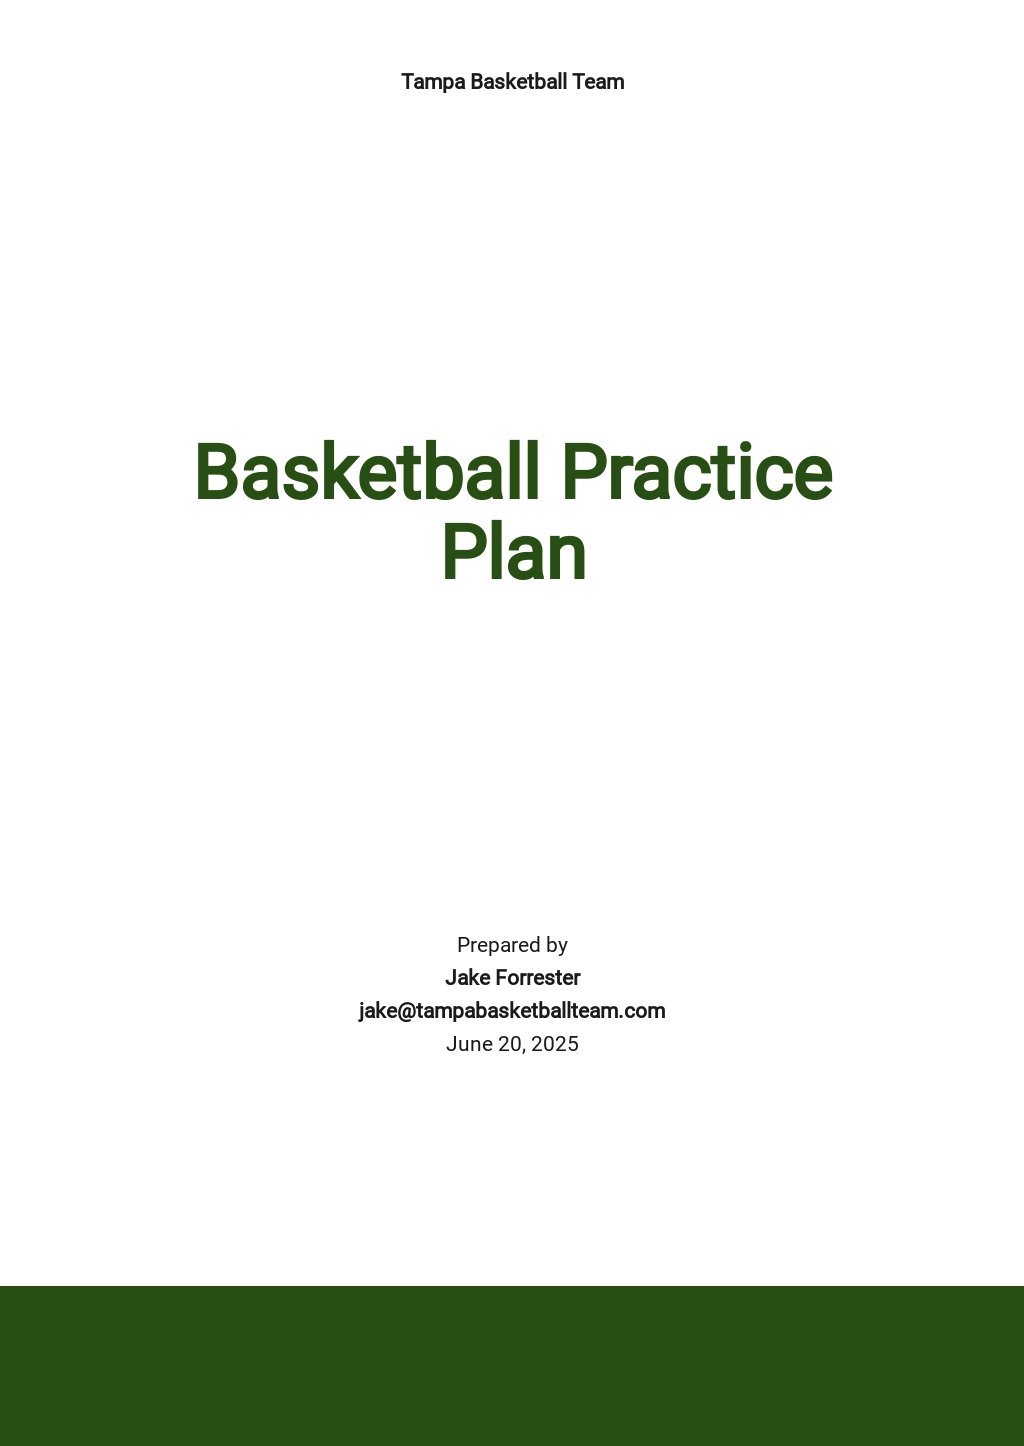 Basketball Practice Plan Template